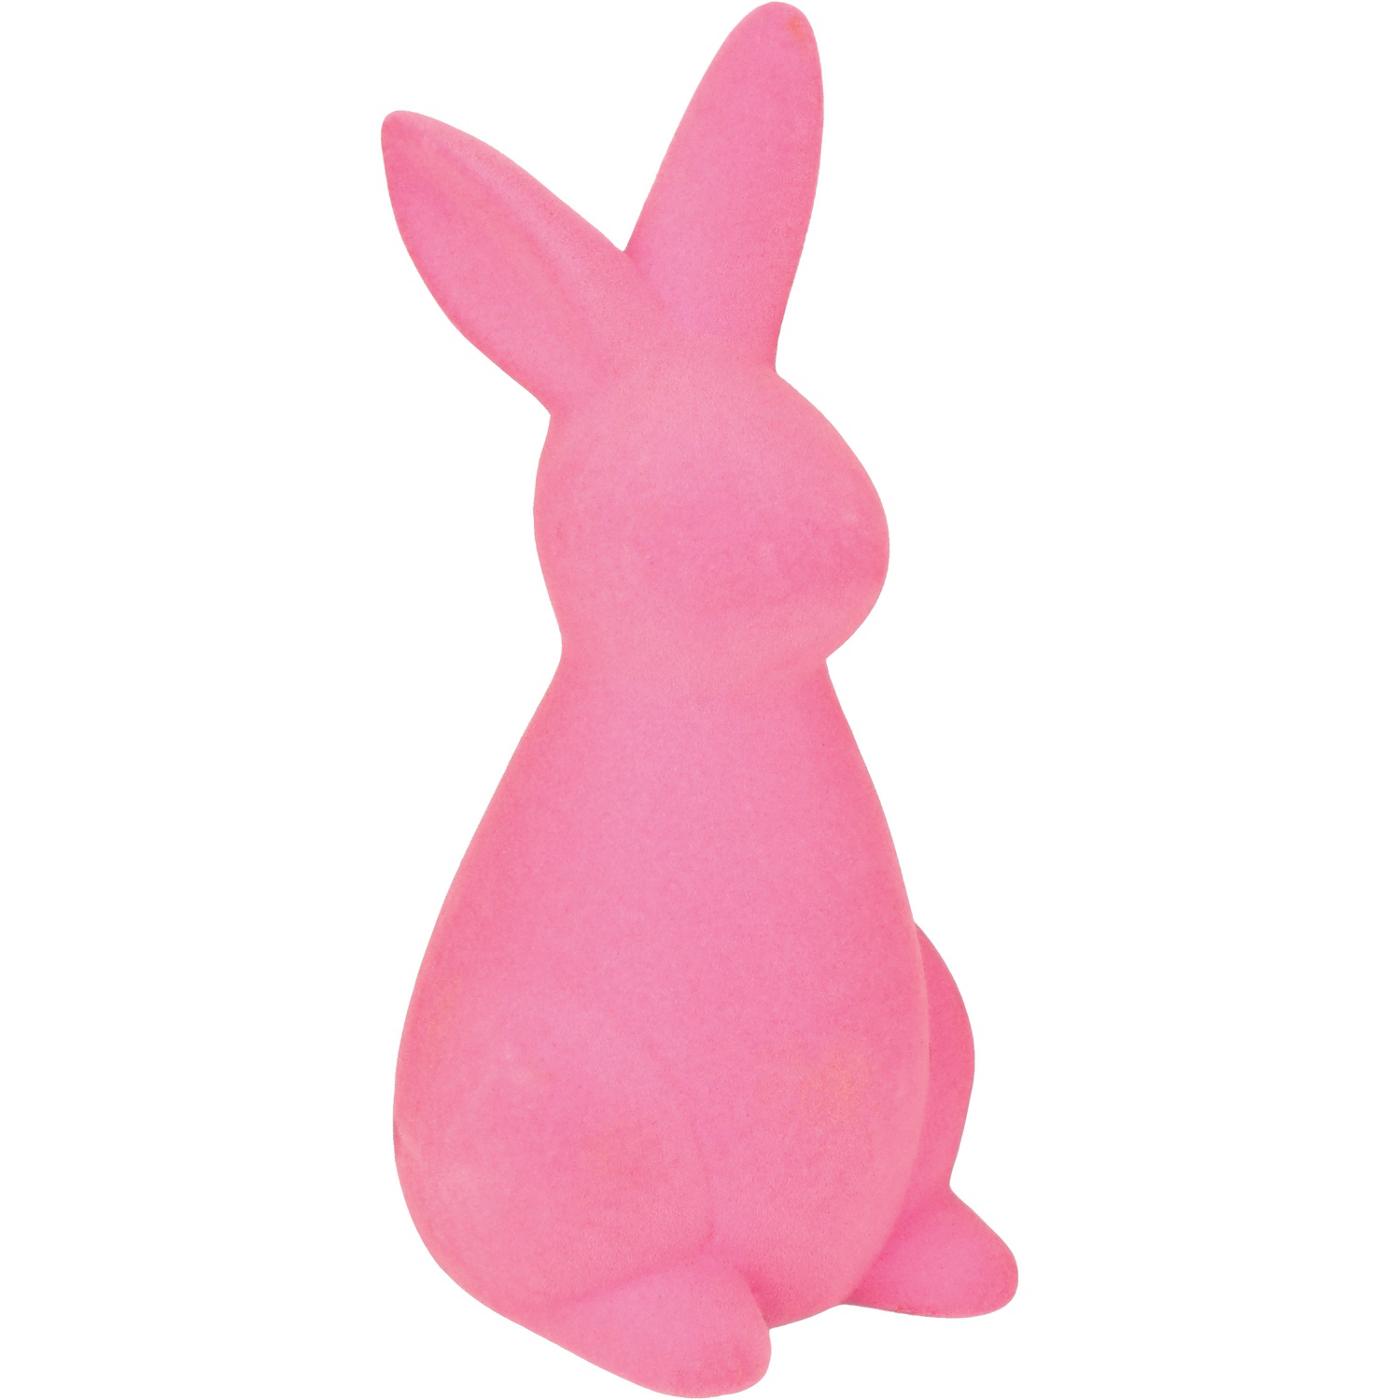 Destination Holiday Flocked Easter Bunny – Pink; image 1 of 2